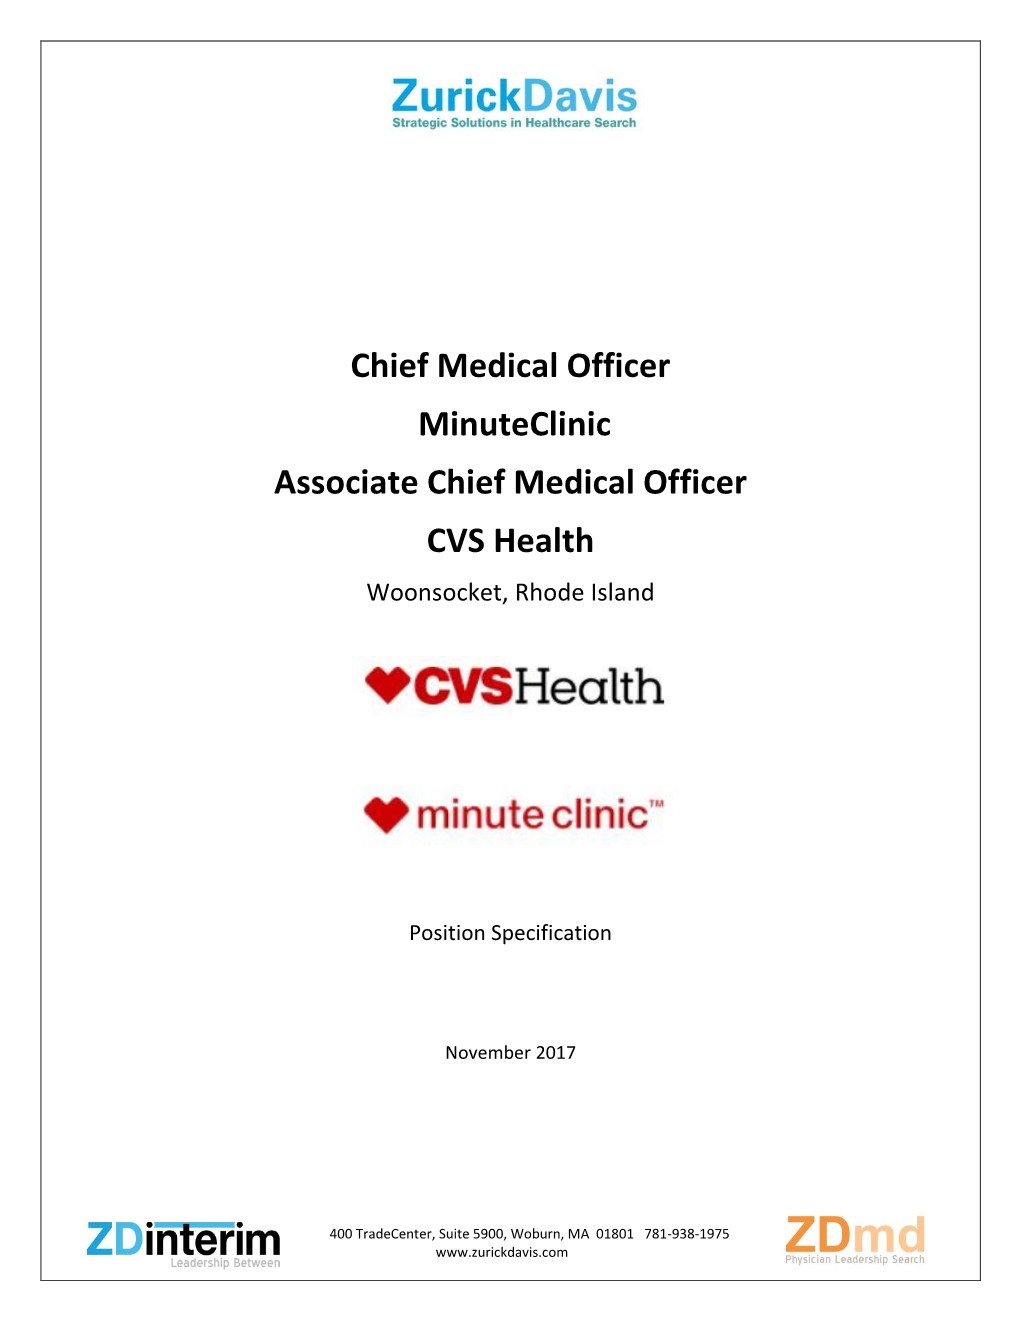 Chief Medical Officer Minuteclinic Associate Chief Medical Officer CVS Health Woonsocket, Rhode Island